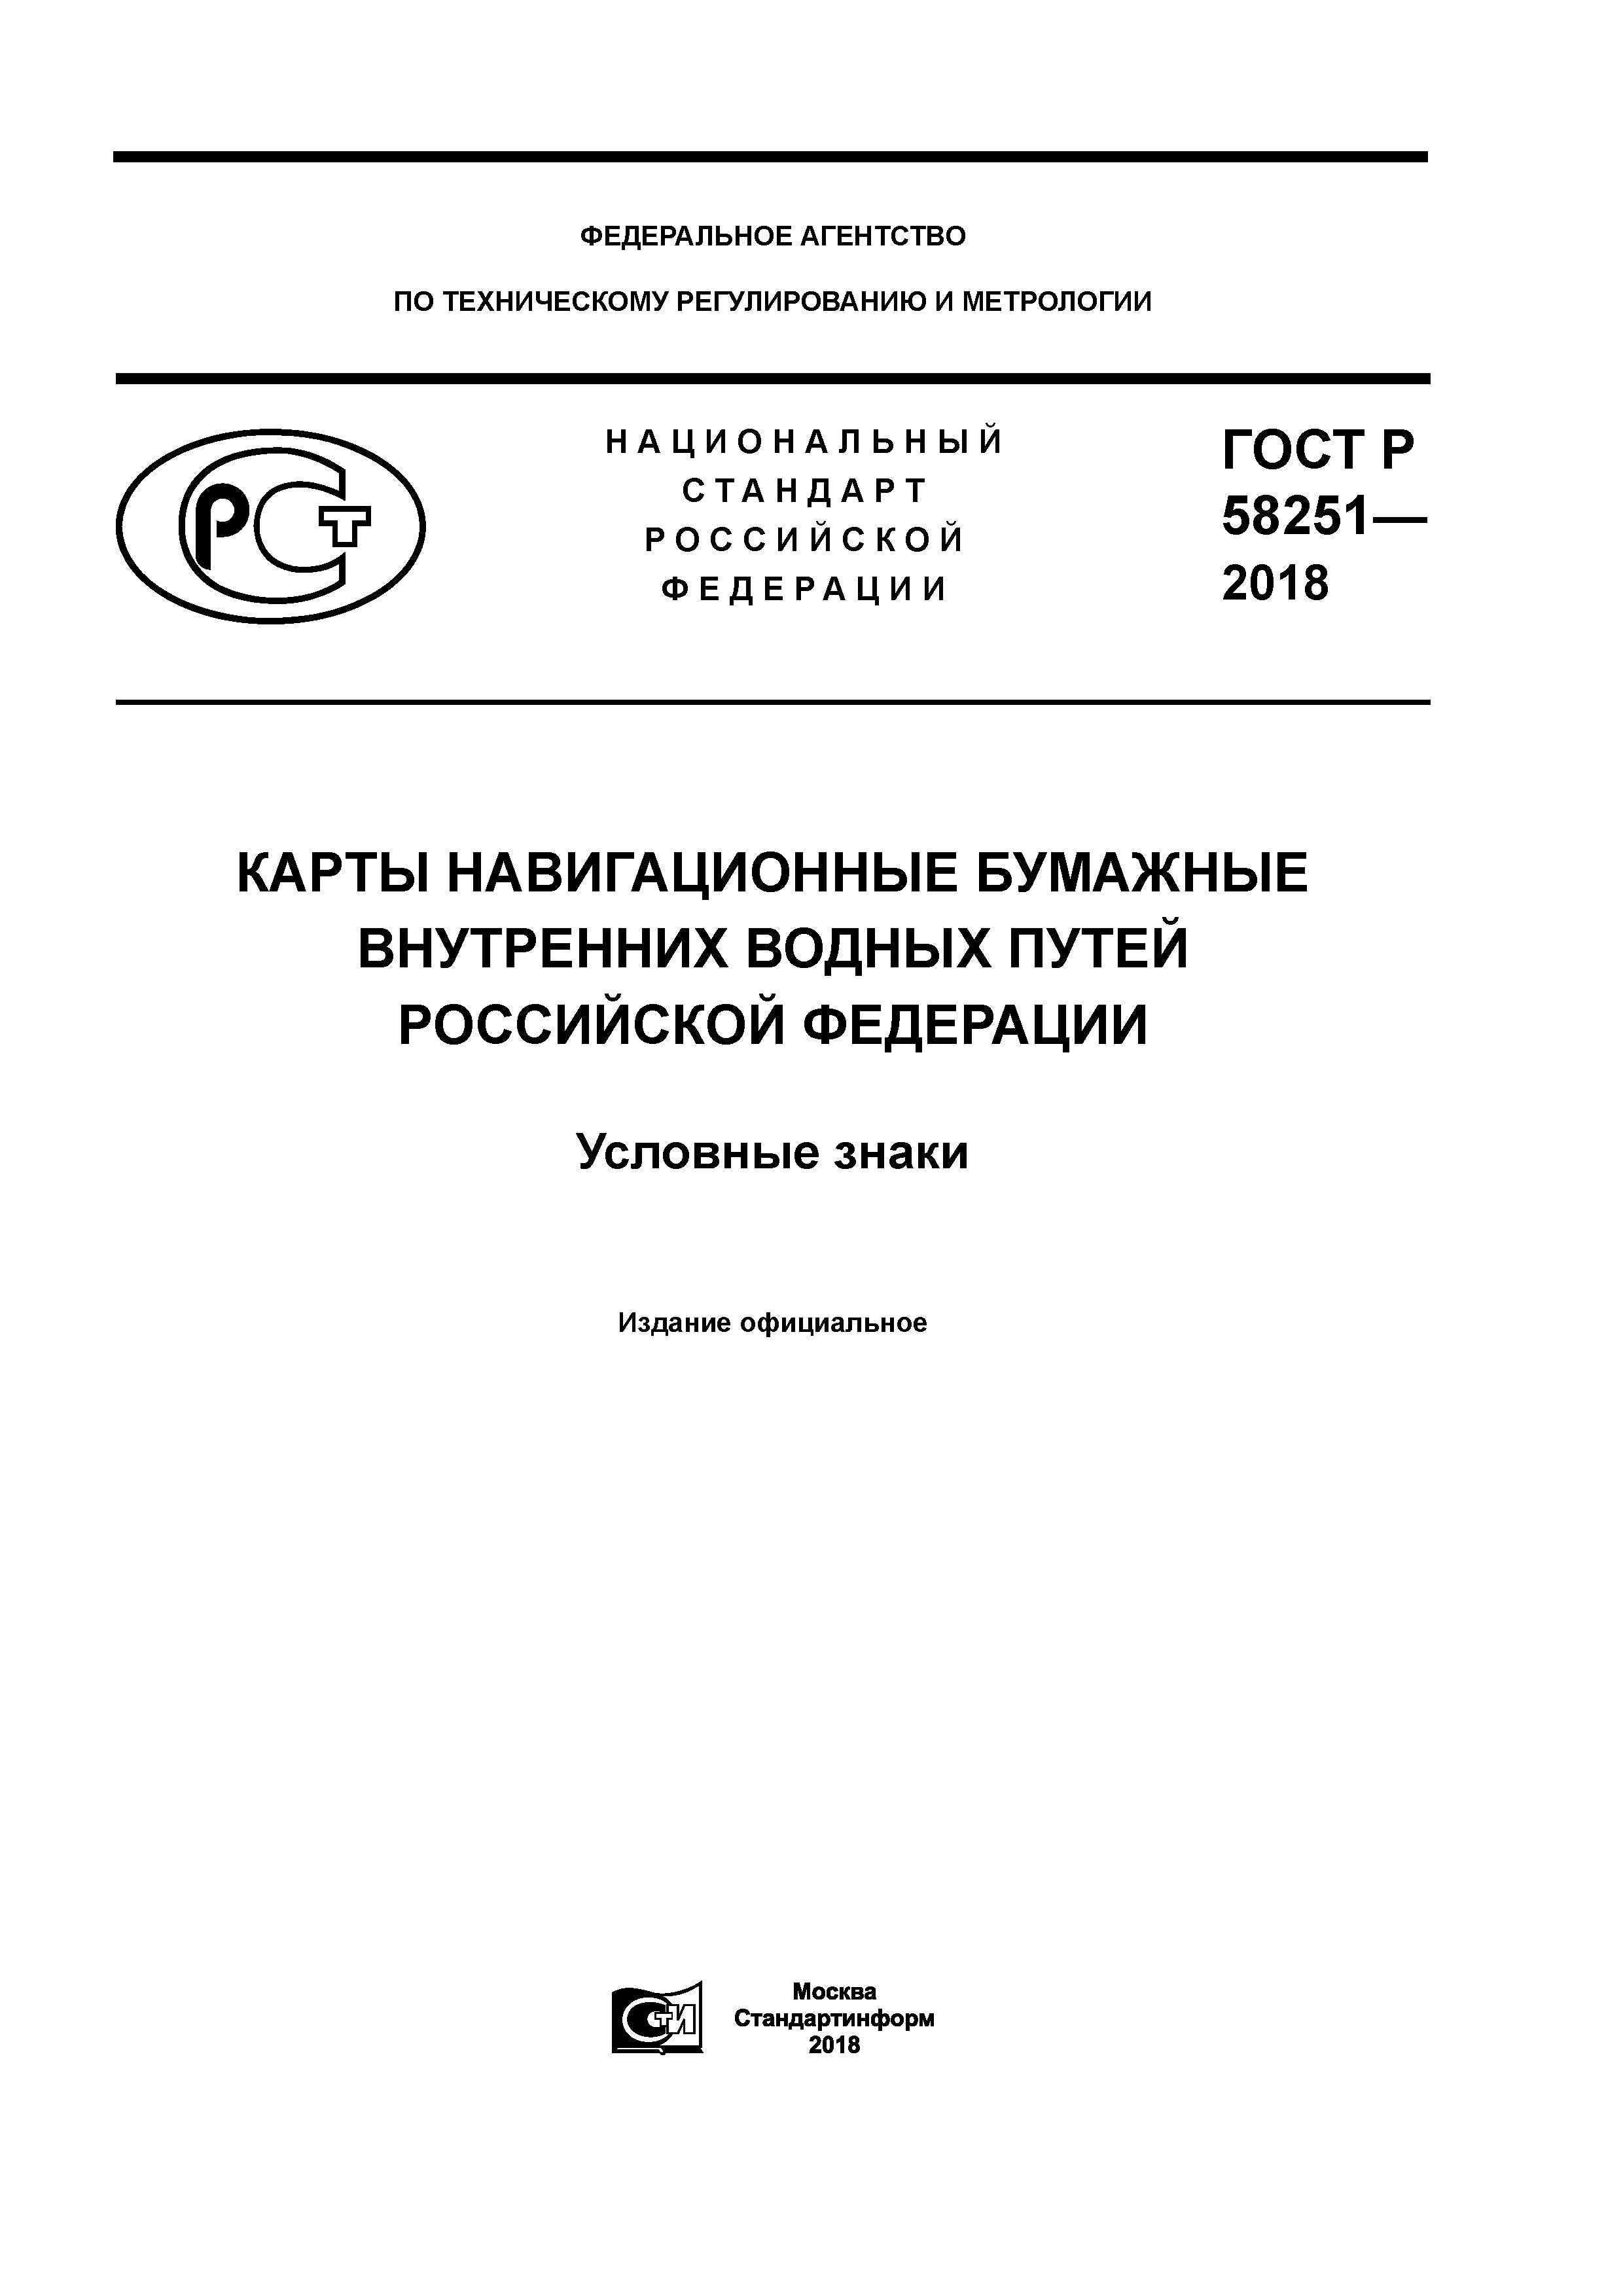 ГОСТ Р 58251-2018